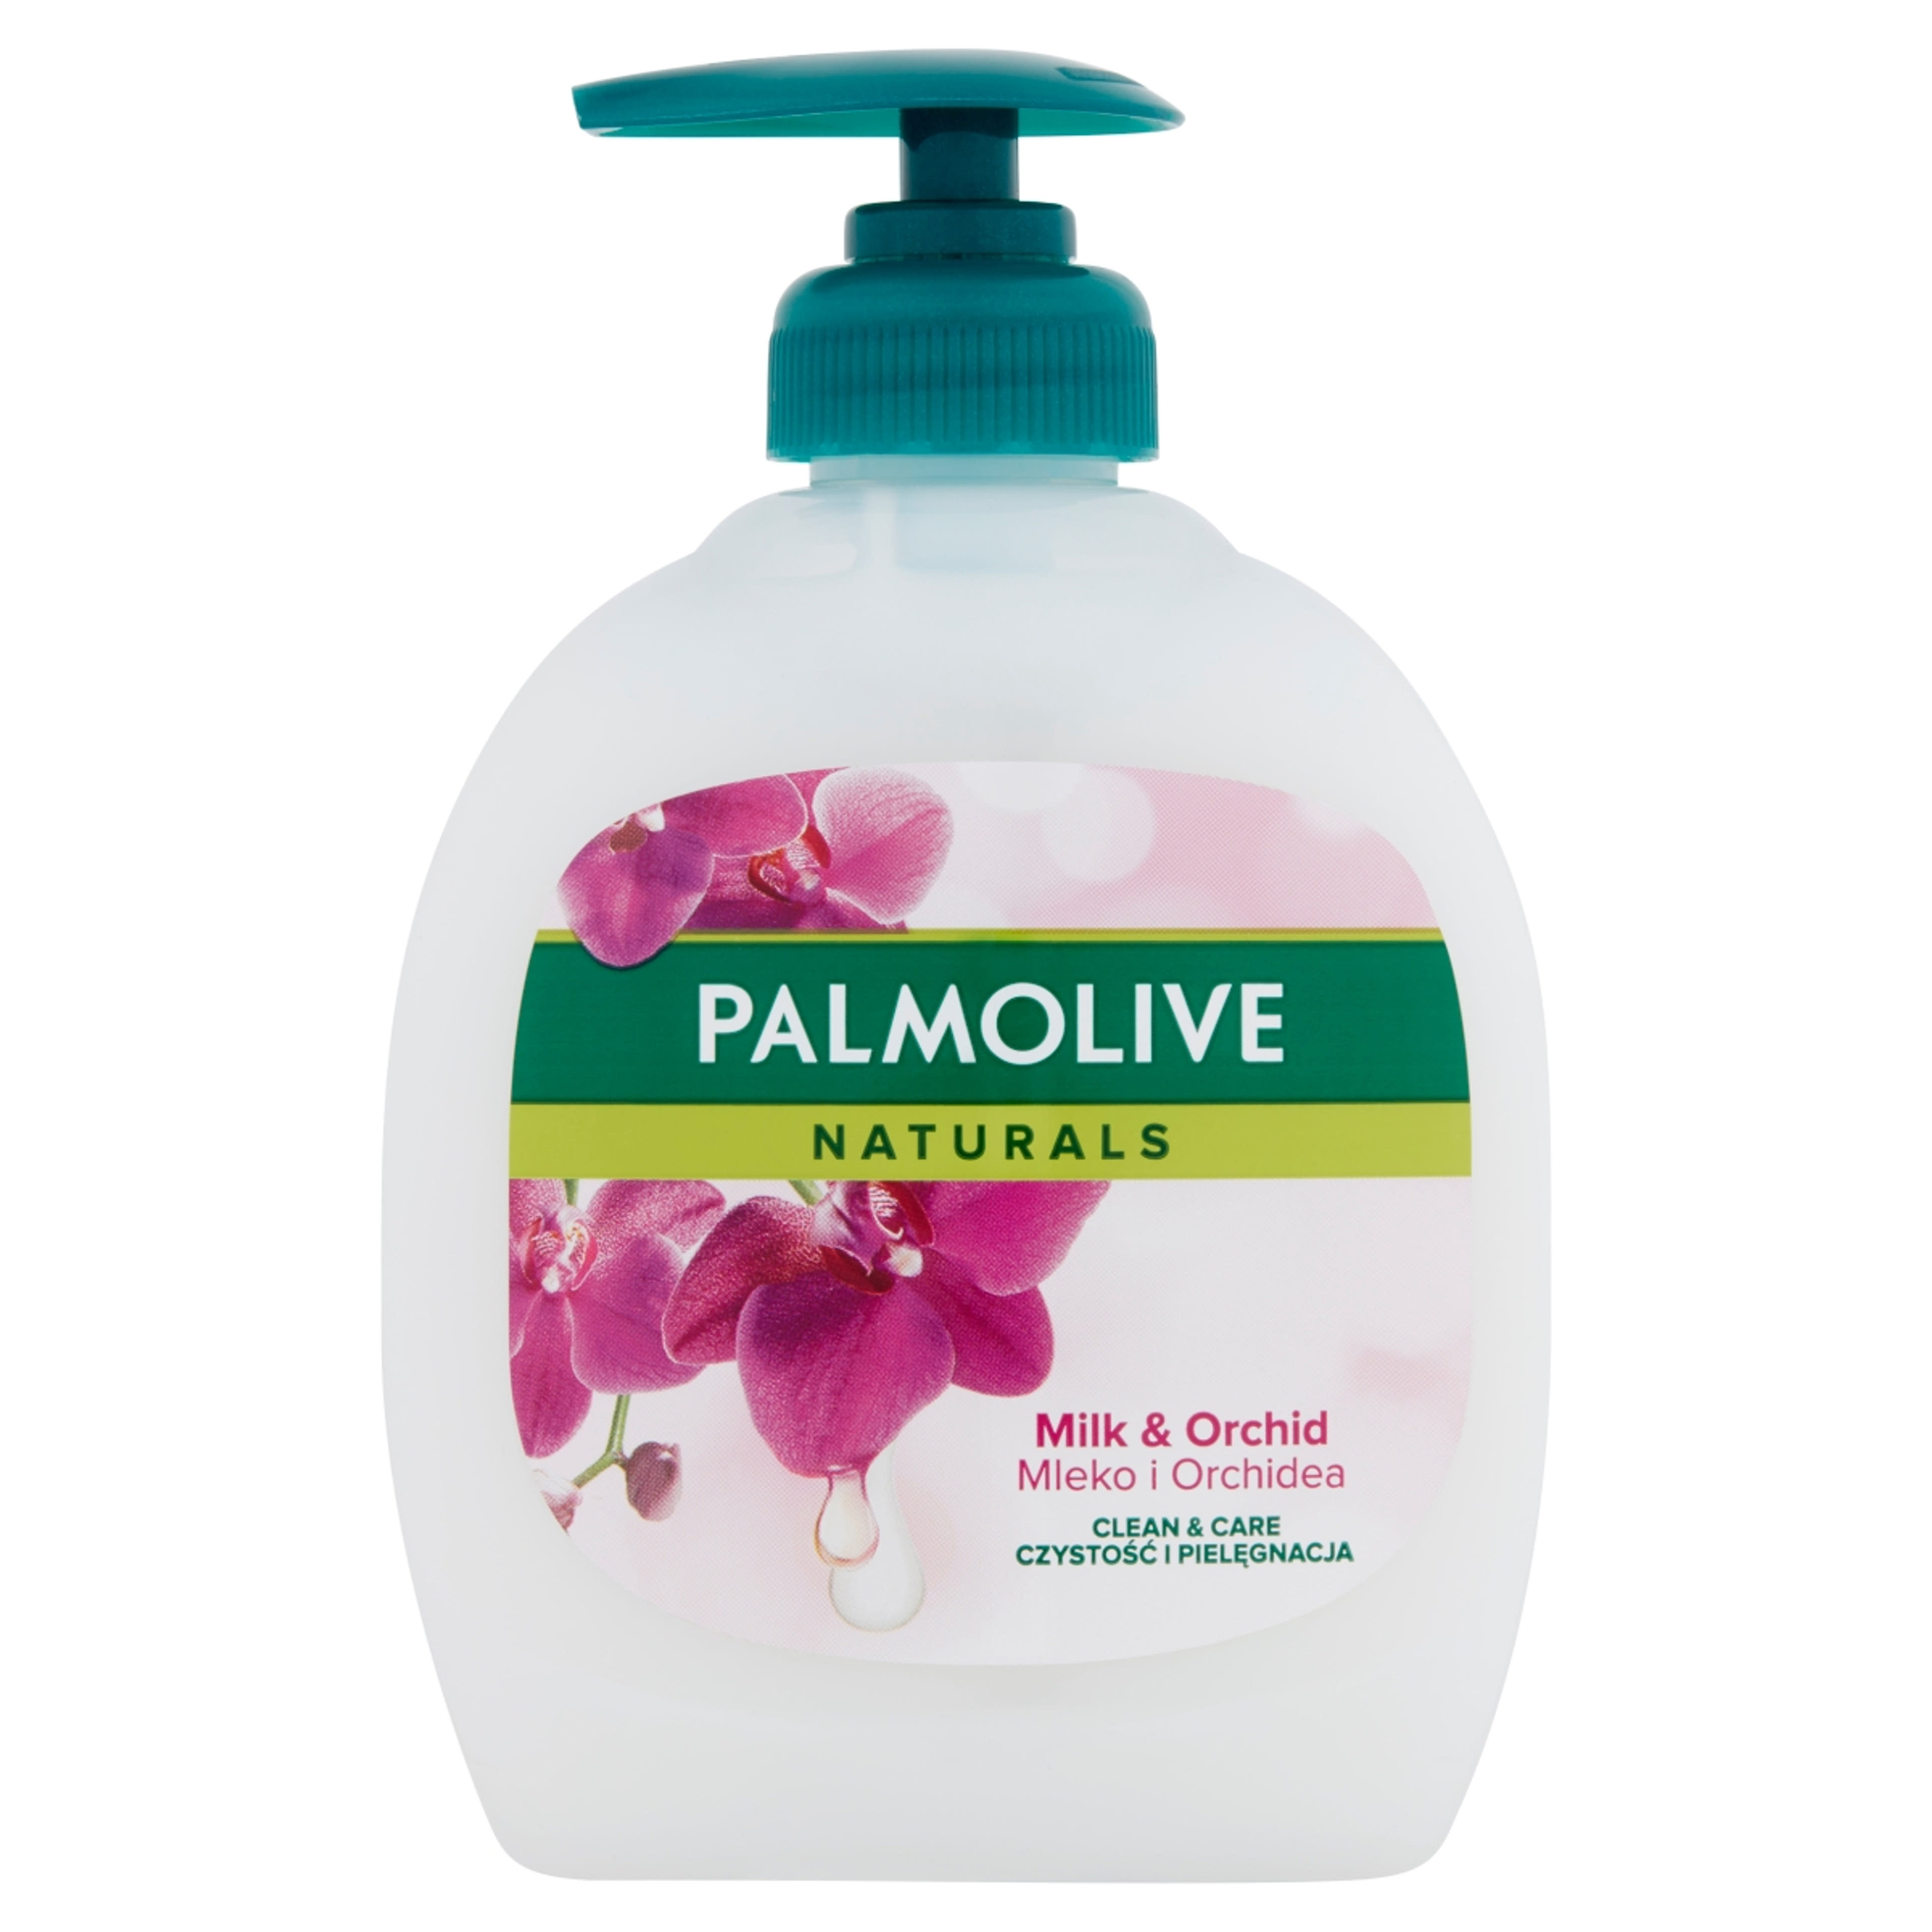 Palmolive Naturals Milk & Orchid folyékony szappan - 300 ml-2